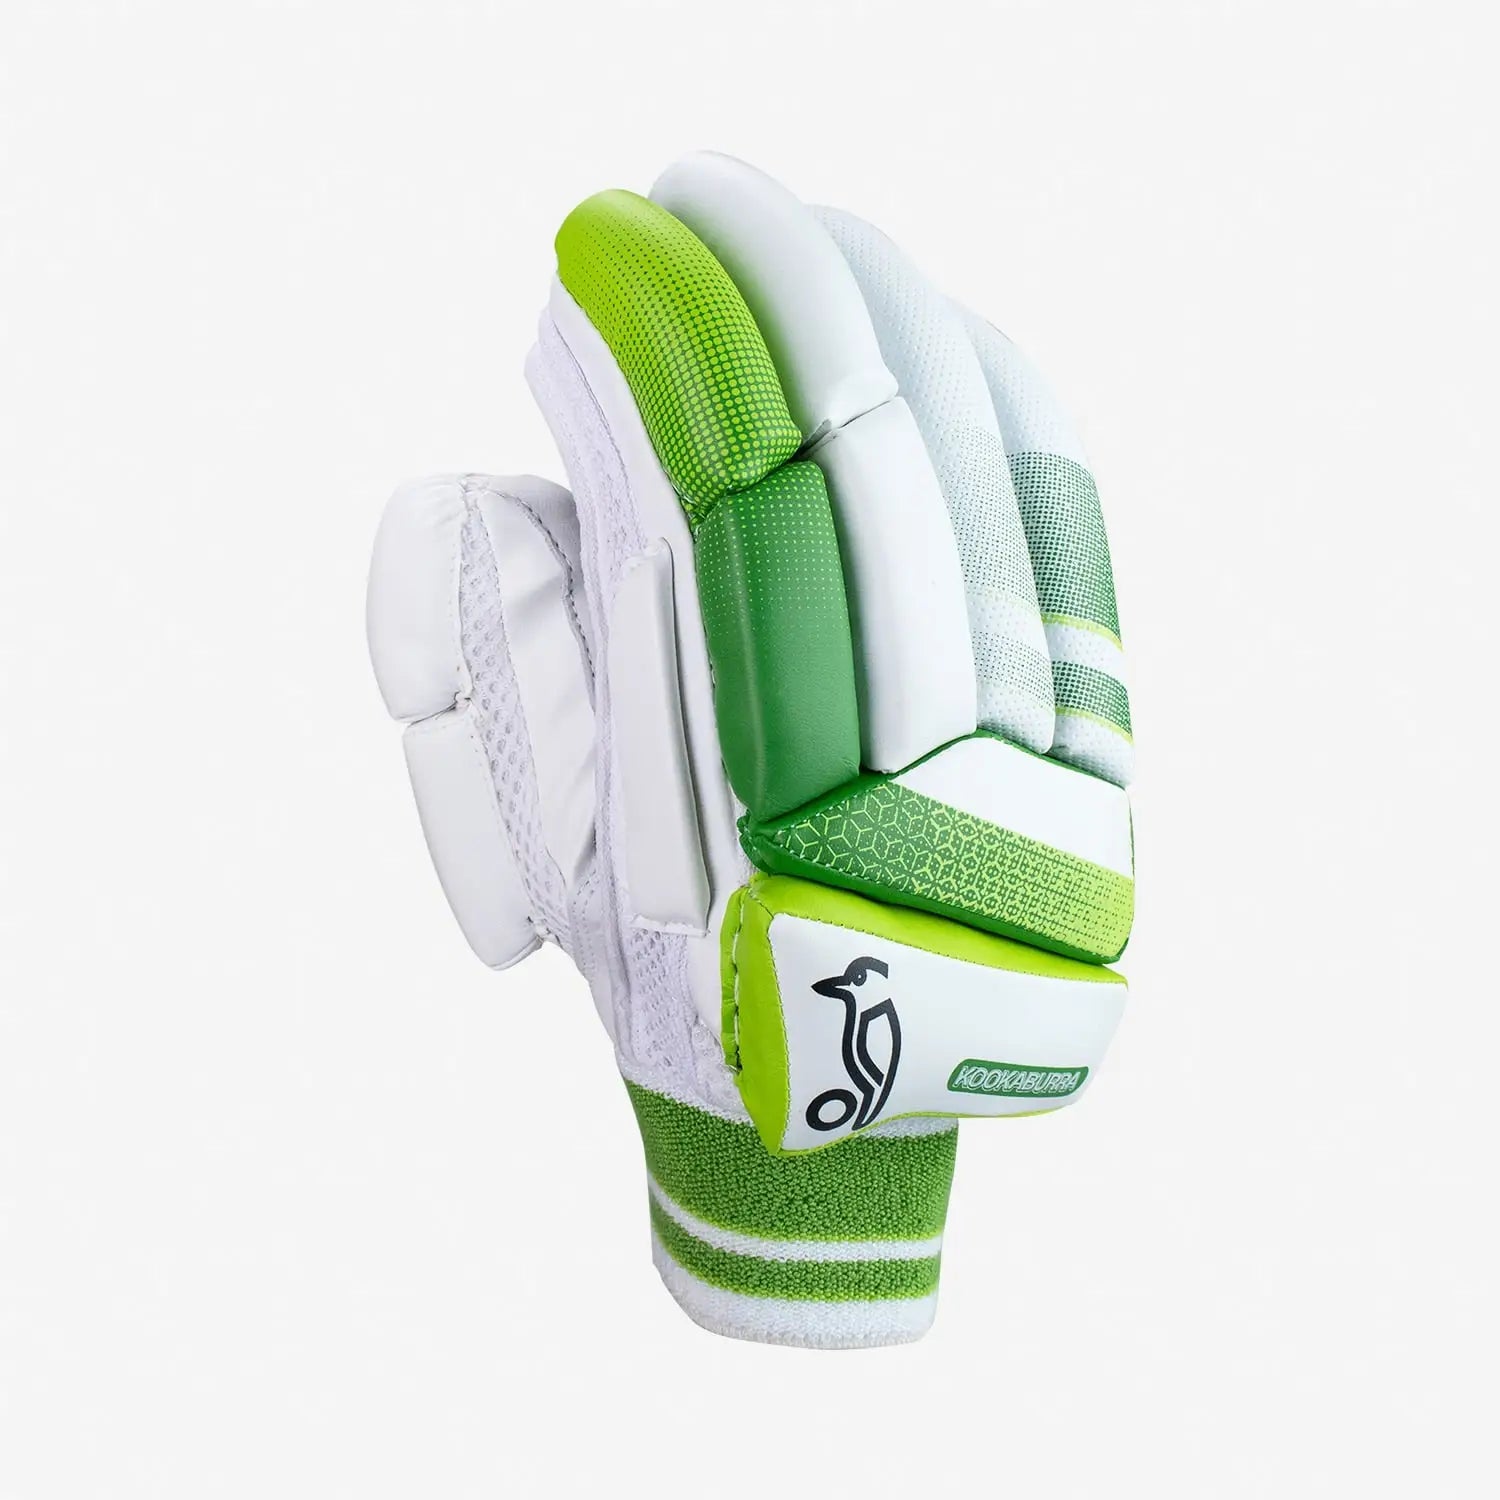 Kookaburra Kahuna 4.1 Cricket Batting Gloves Comfort and Protection - GLOVE - BATTING